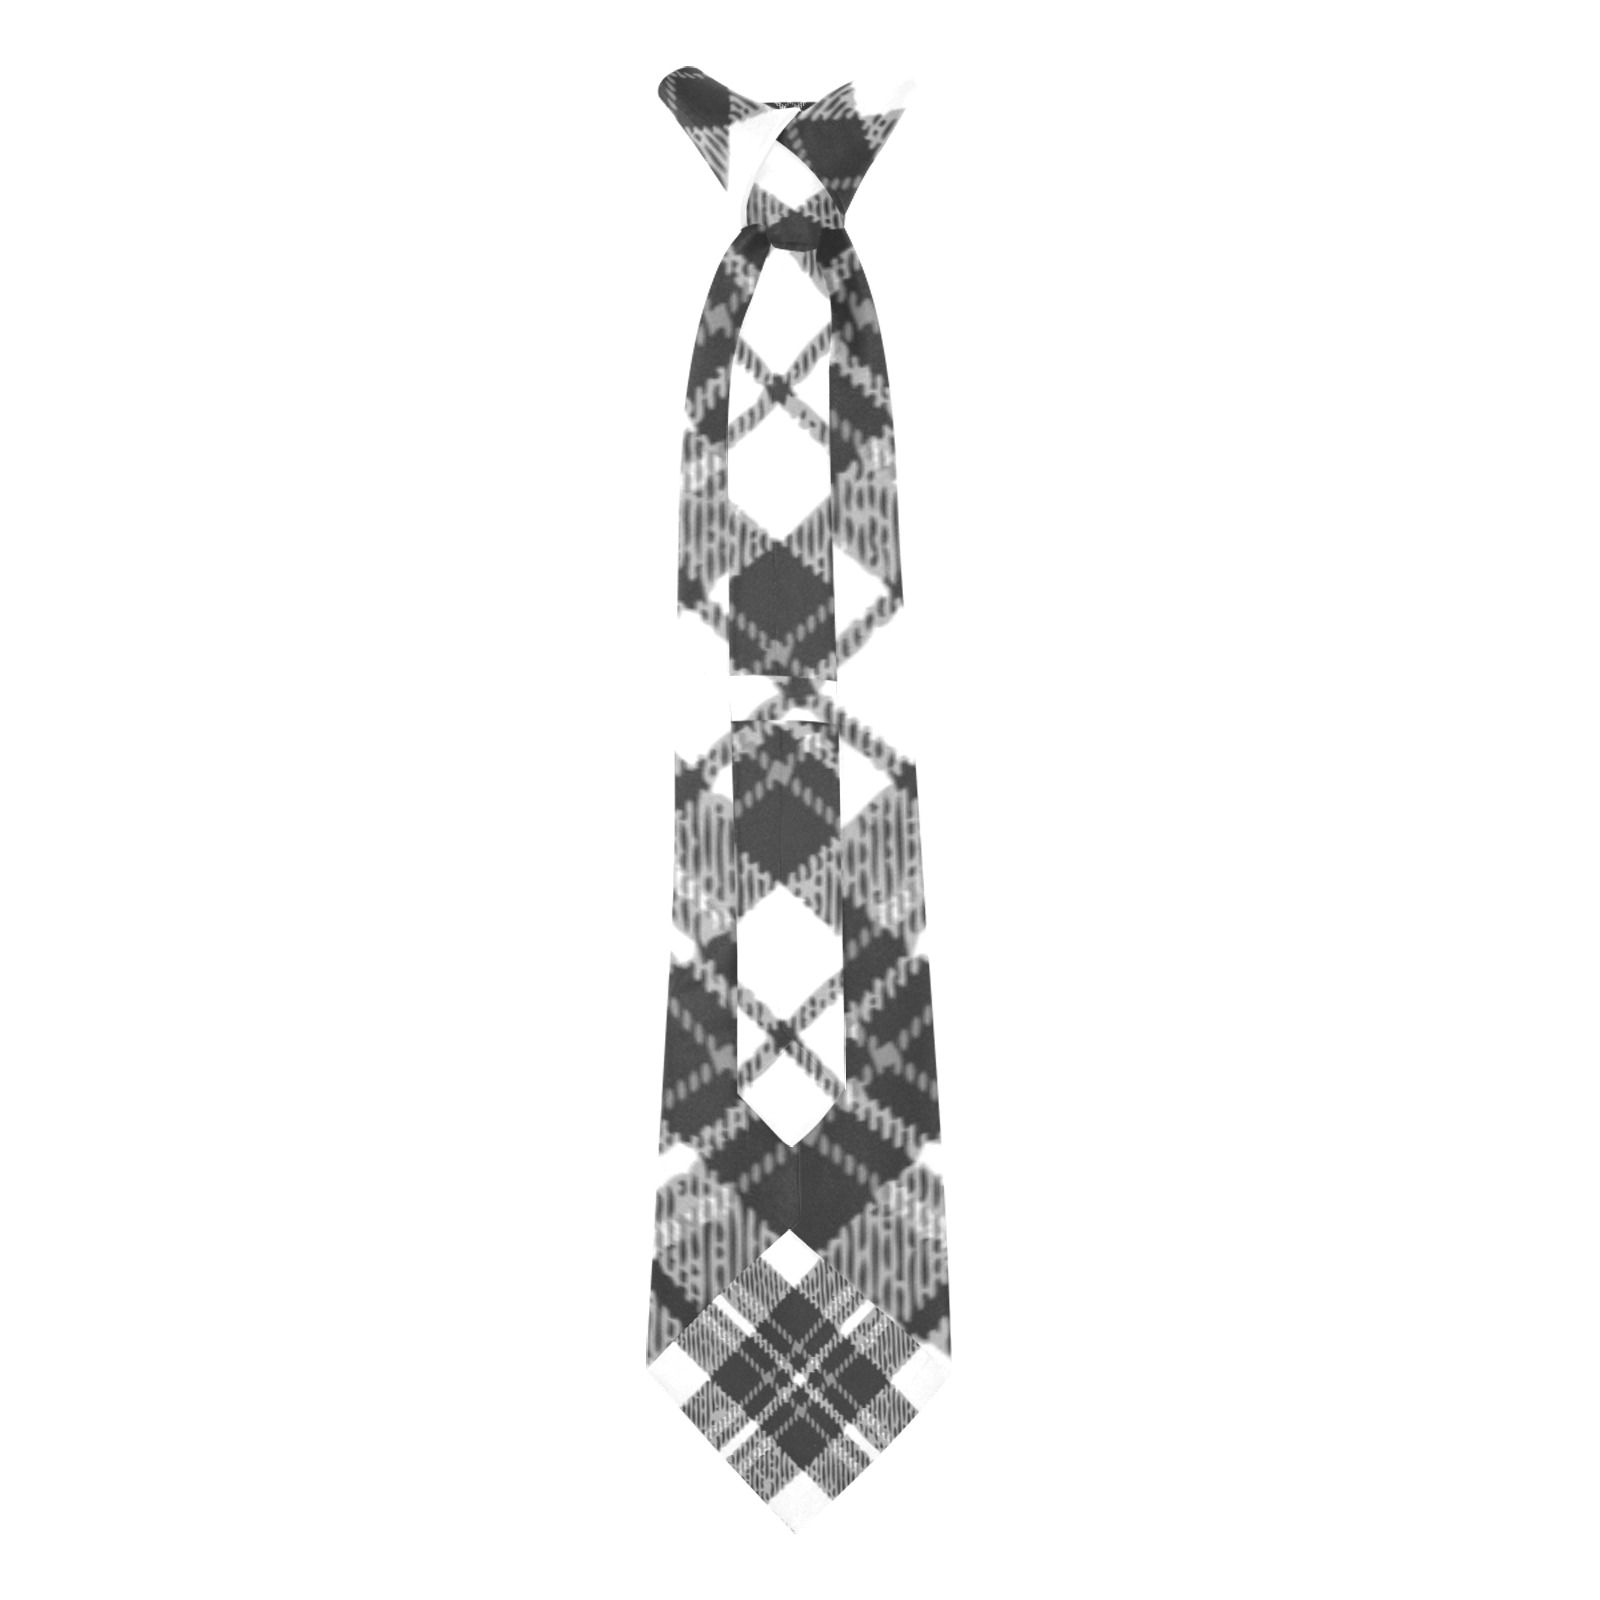 Tartan black white pattern holidays Christmas xmas elegant lines geometric cool fun classic elegance Custom Peekaboo Tie with Hidden Picture